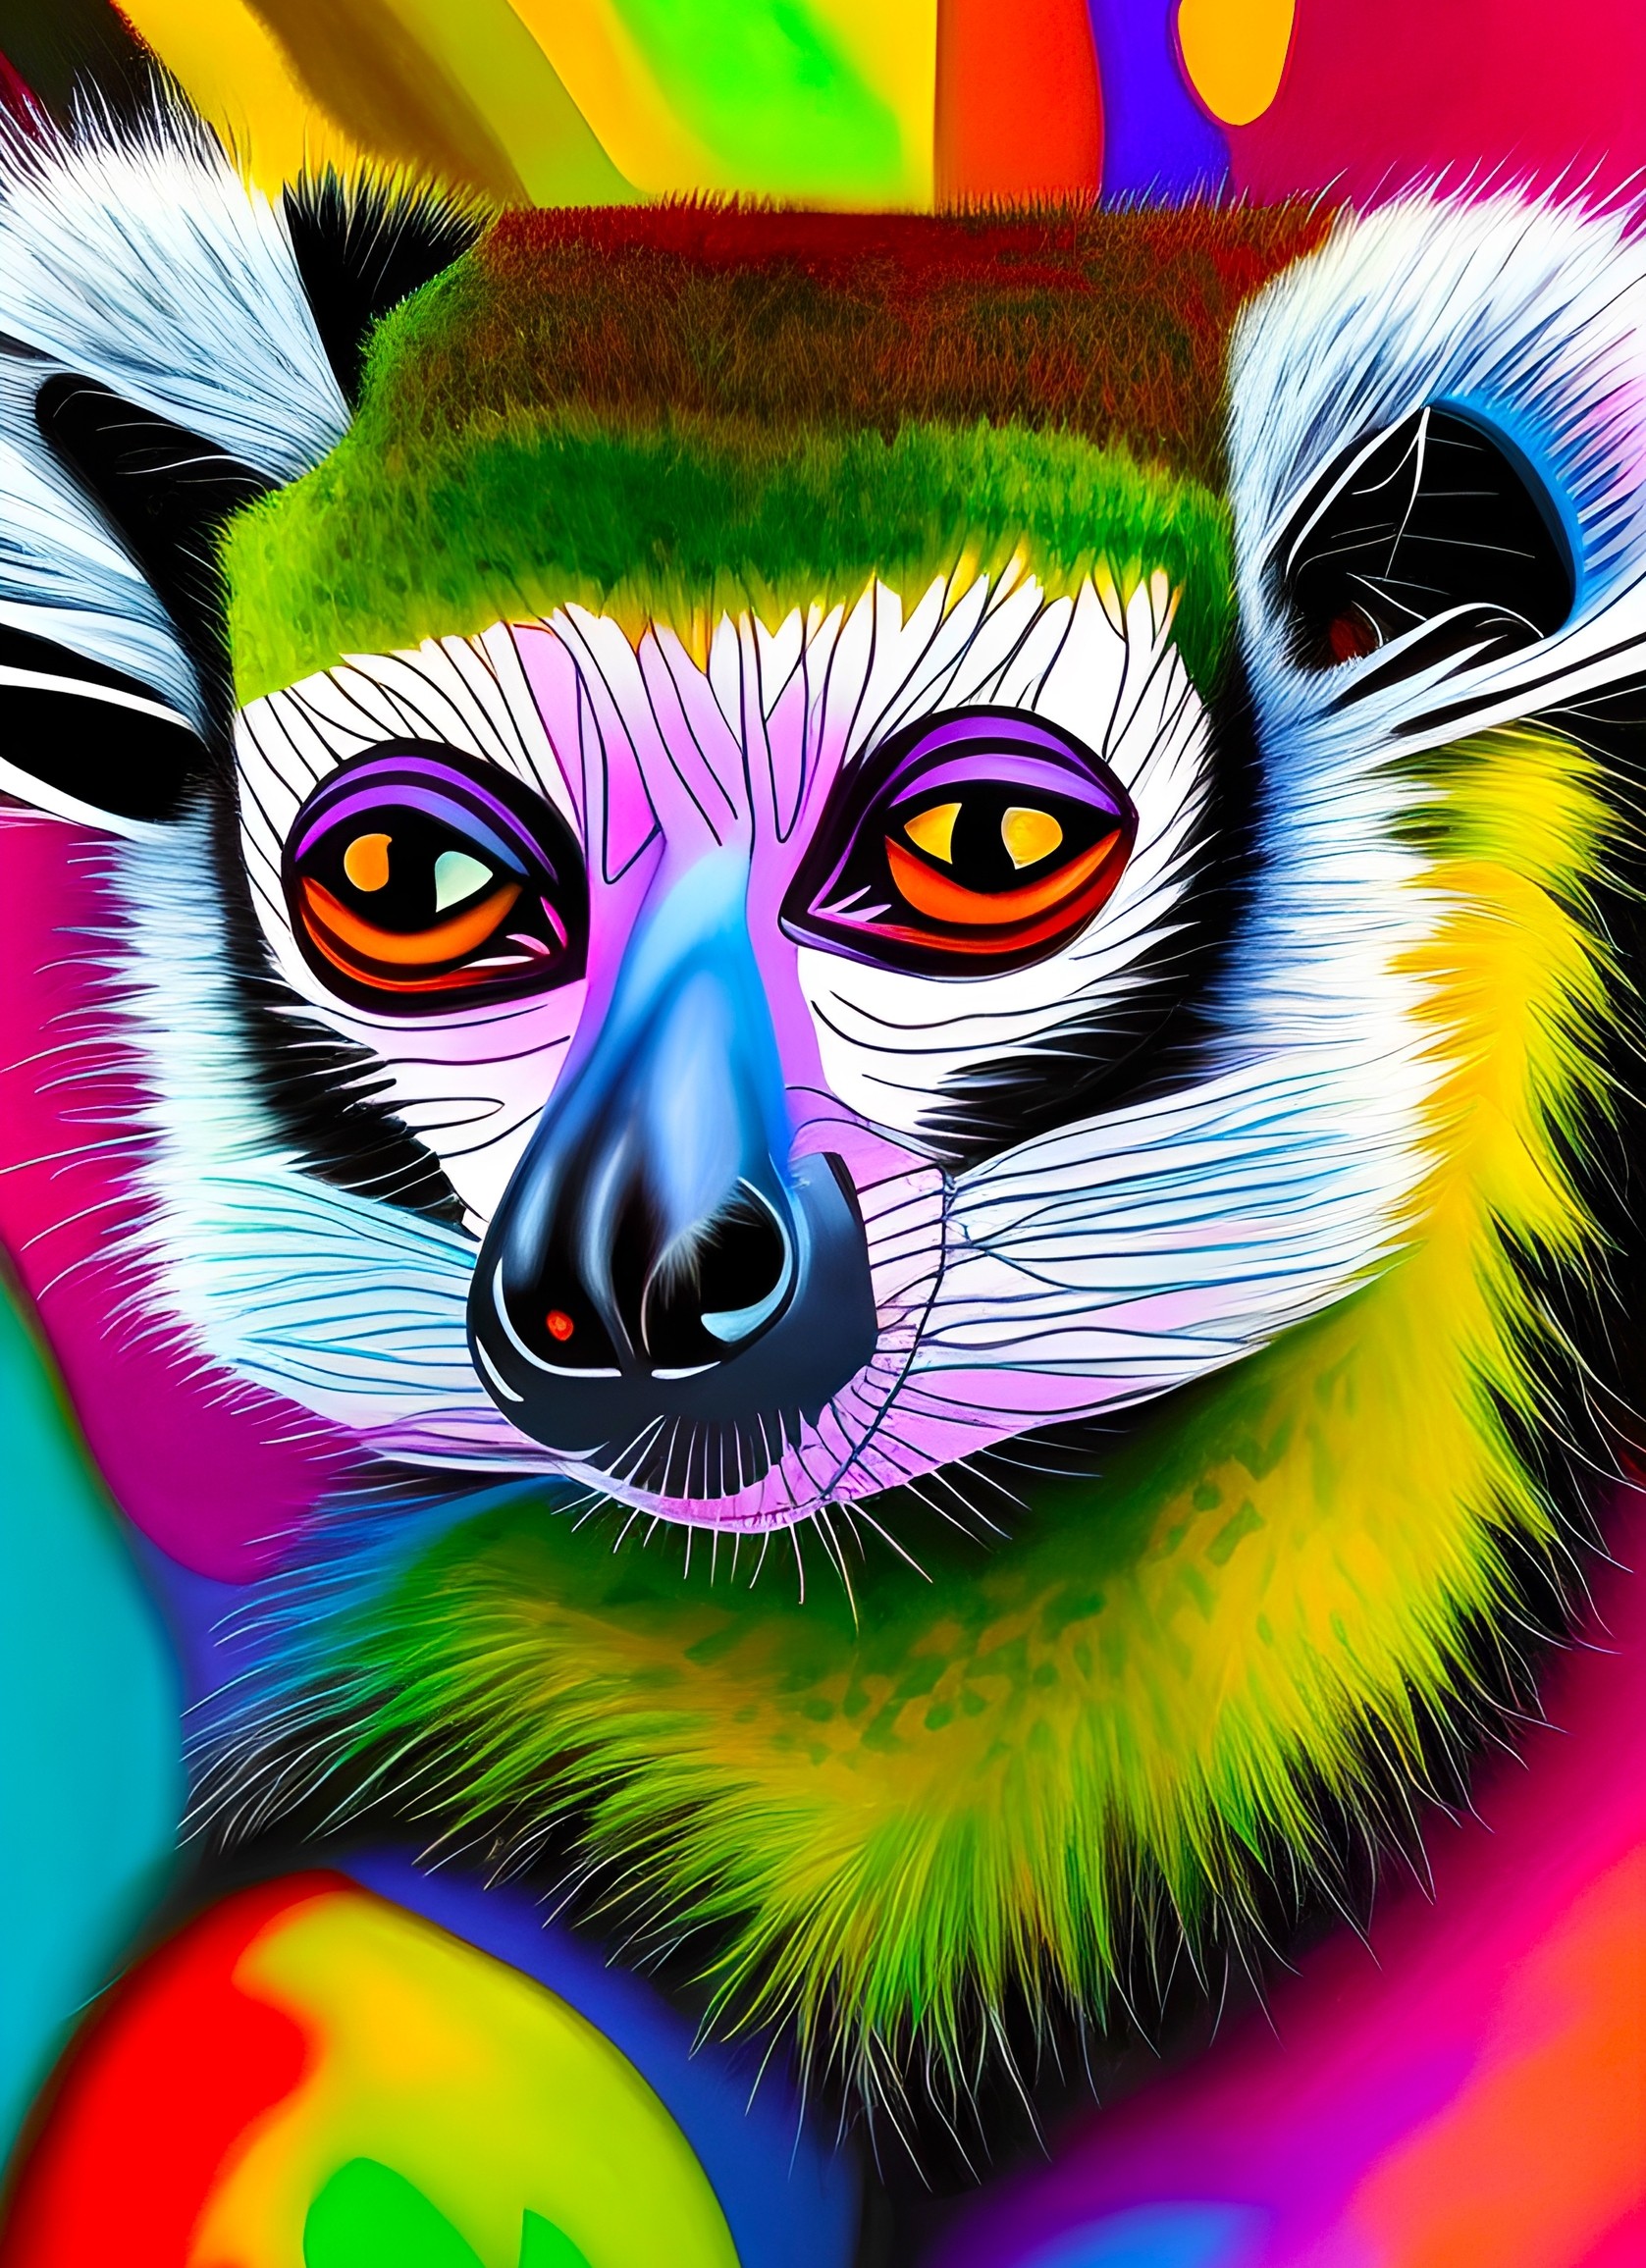 Lemur Animal Colourful Abstract Art Blank Greeting Card